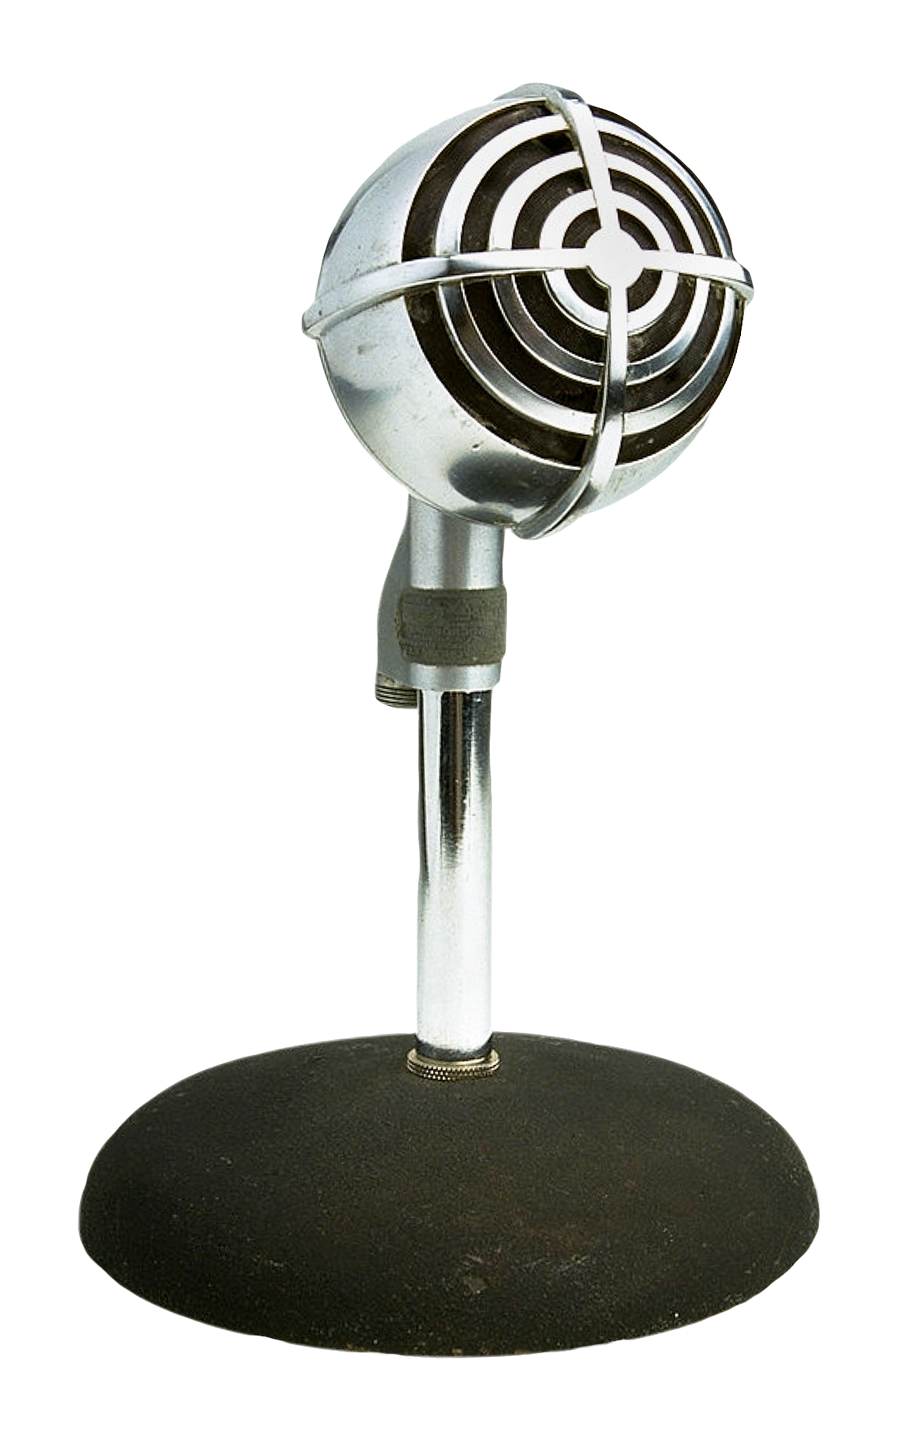 A Close Up Of A Microphone